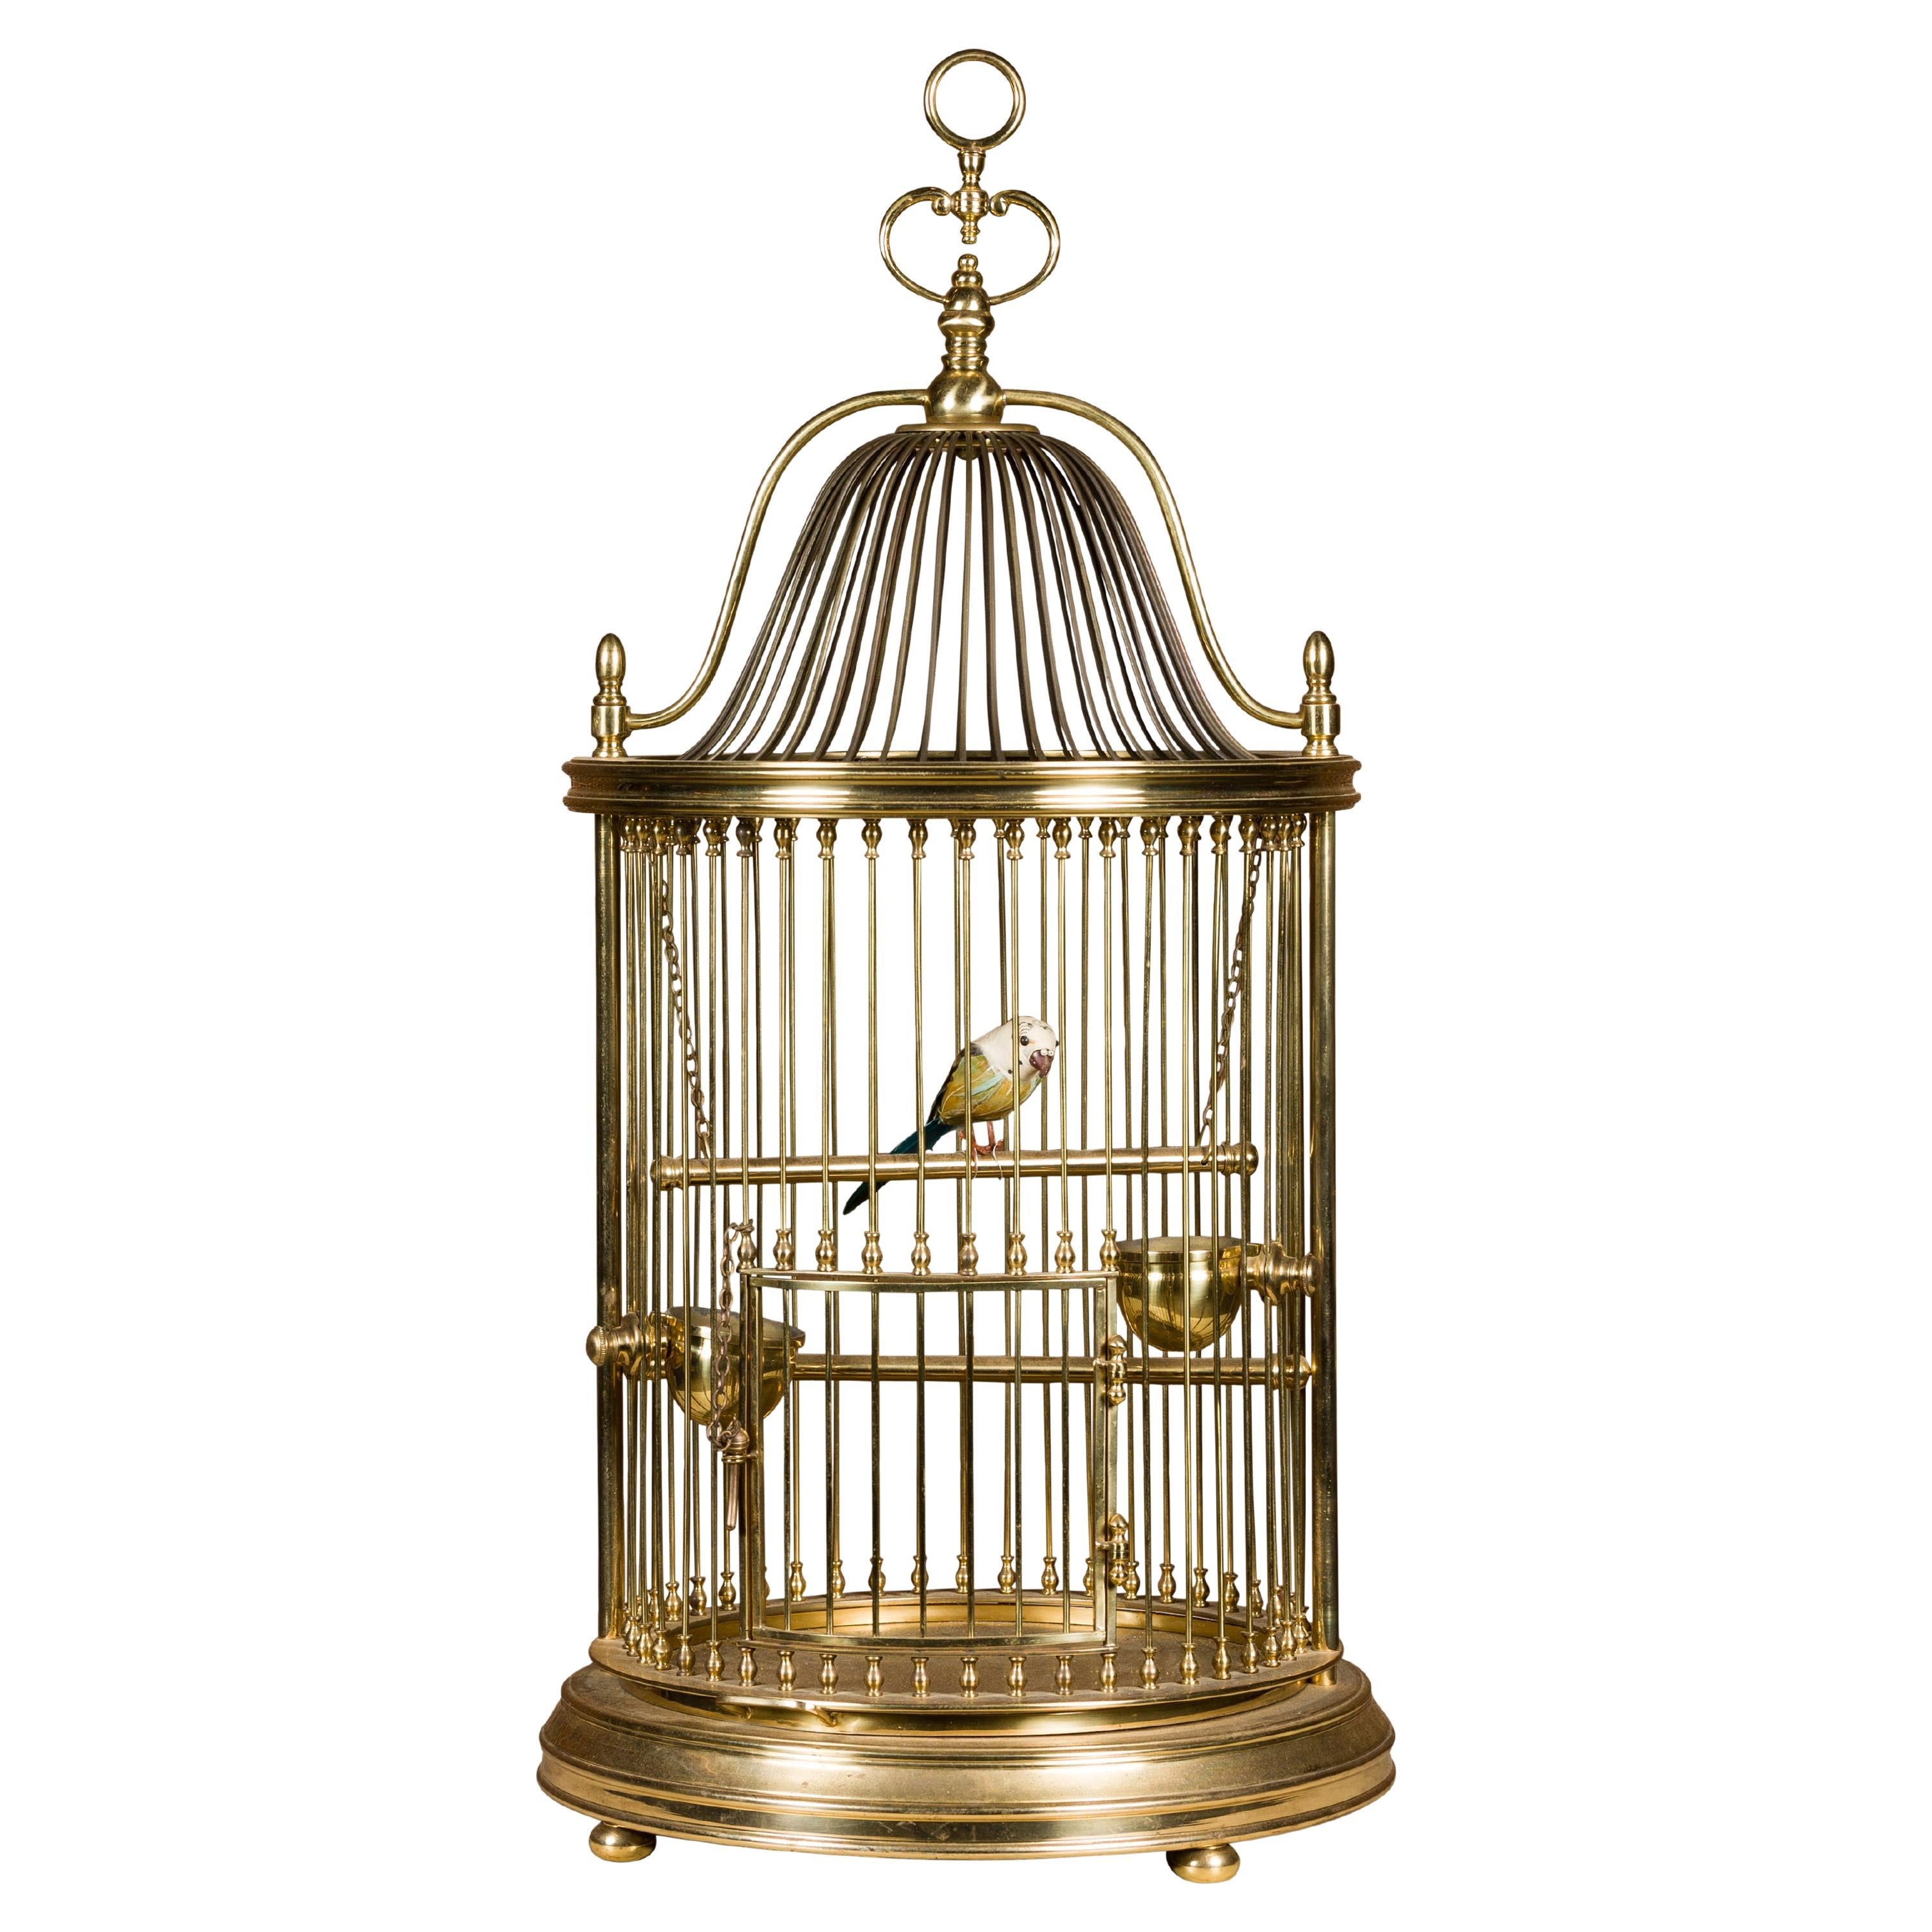 French Midcentury Brass Circular Birdcage with Decorative Bird